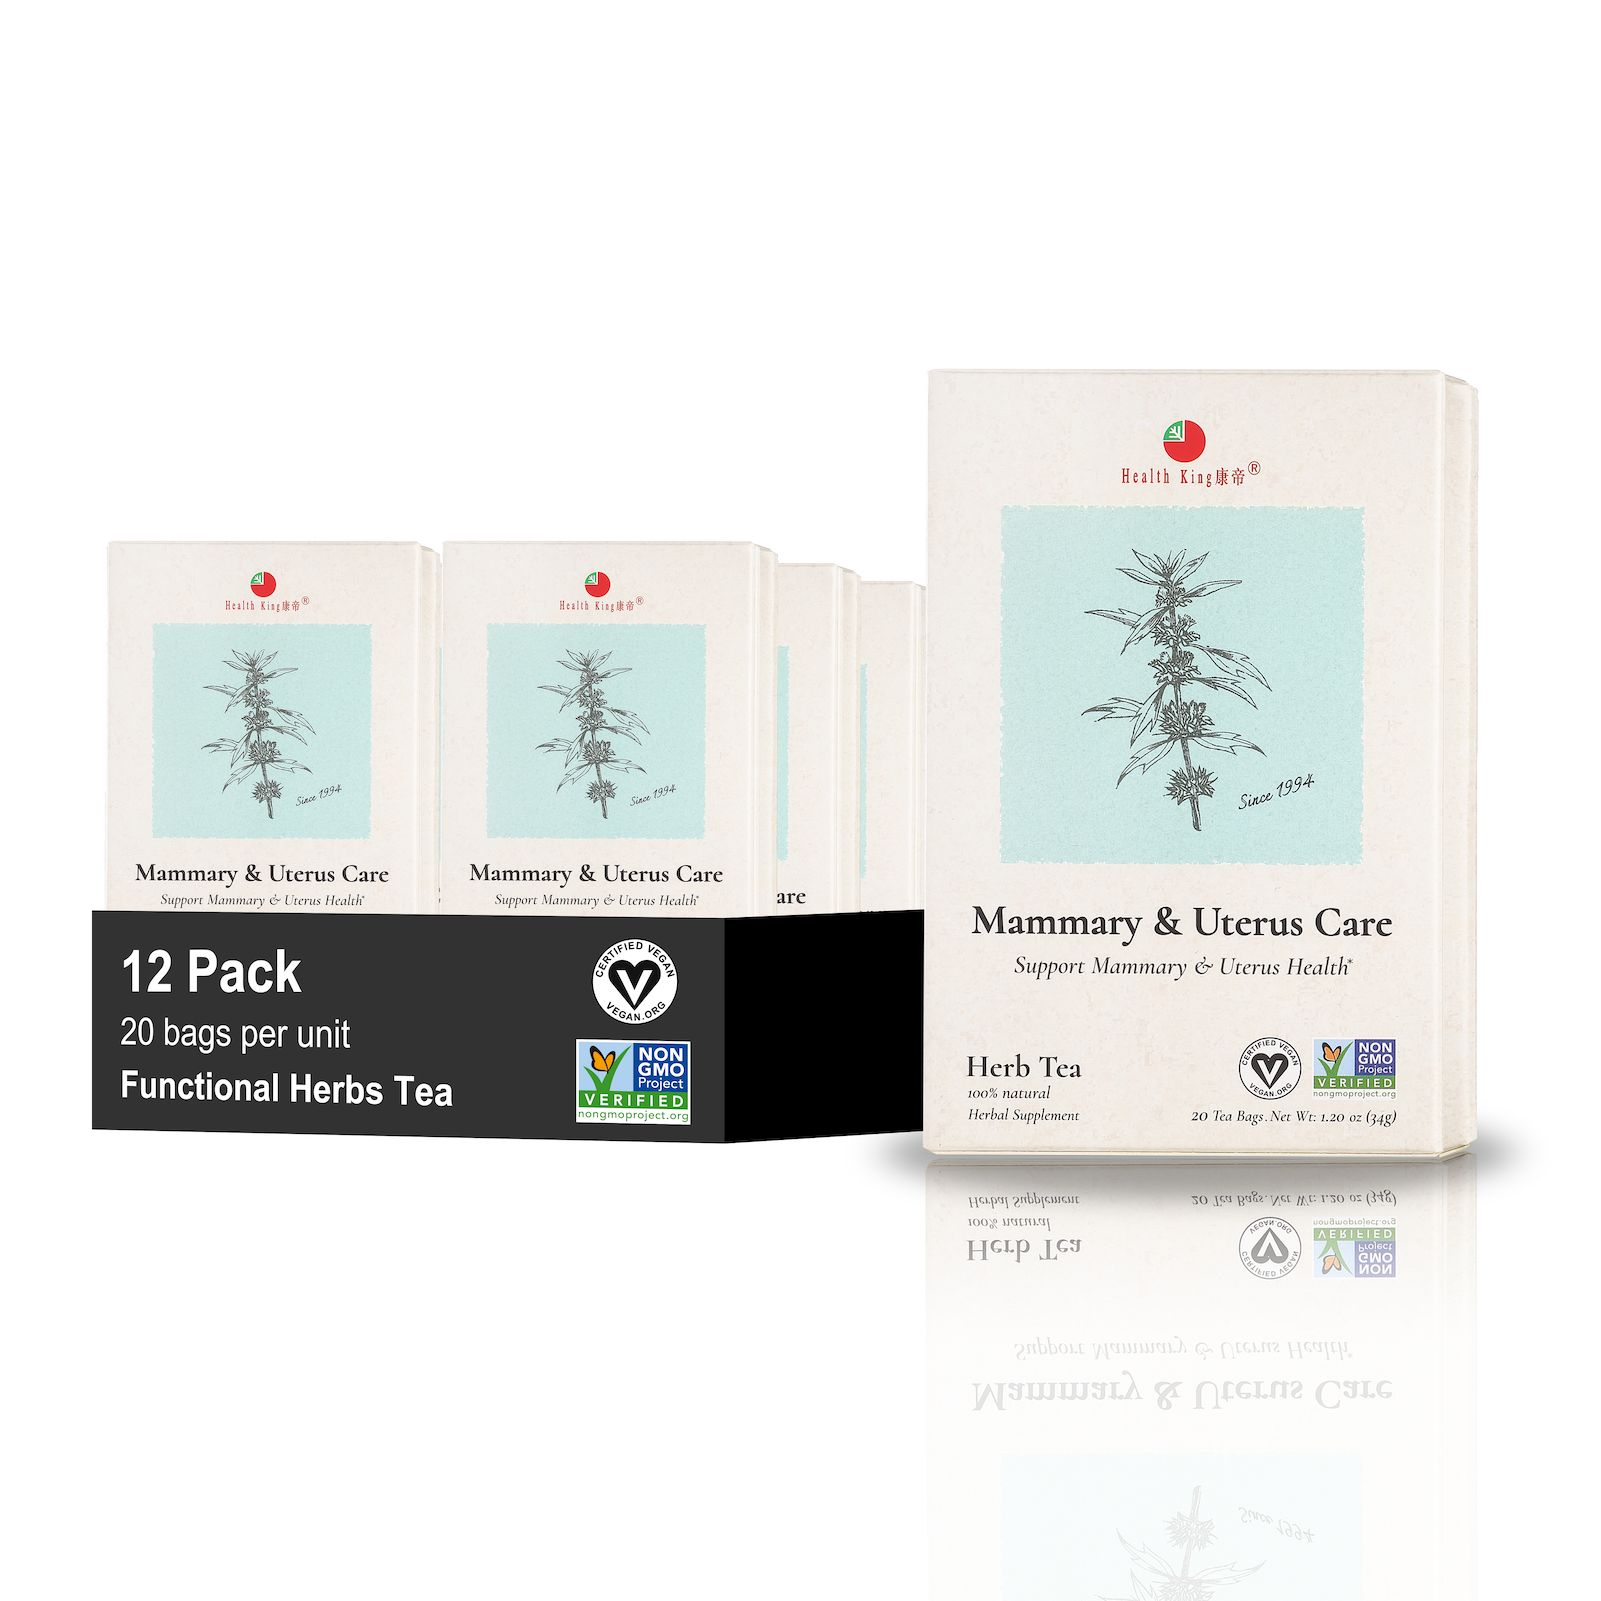 Mammary & Uterus Care Herb Tea 12-pack with health and wellness branding